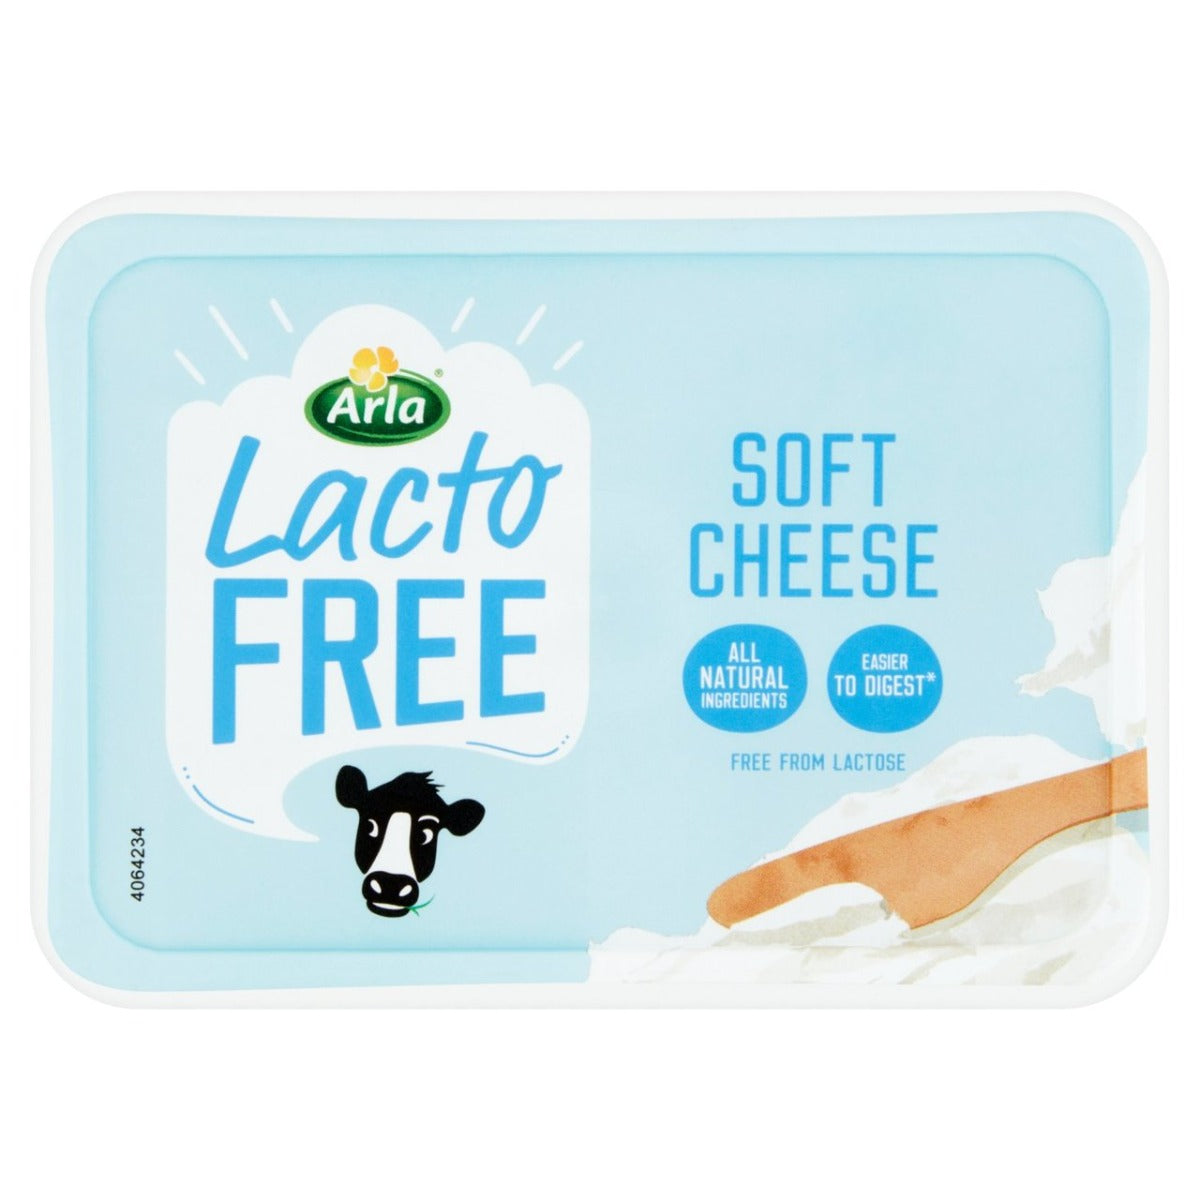 Arla Lacto Free Soft Cheese 200g